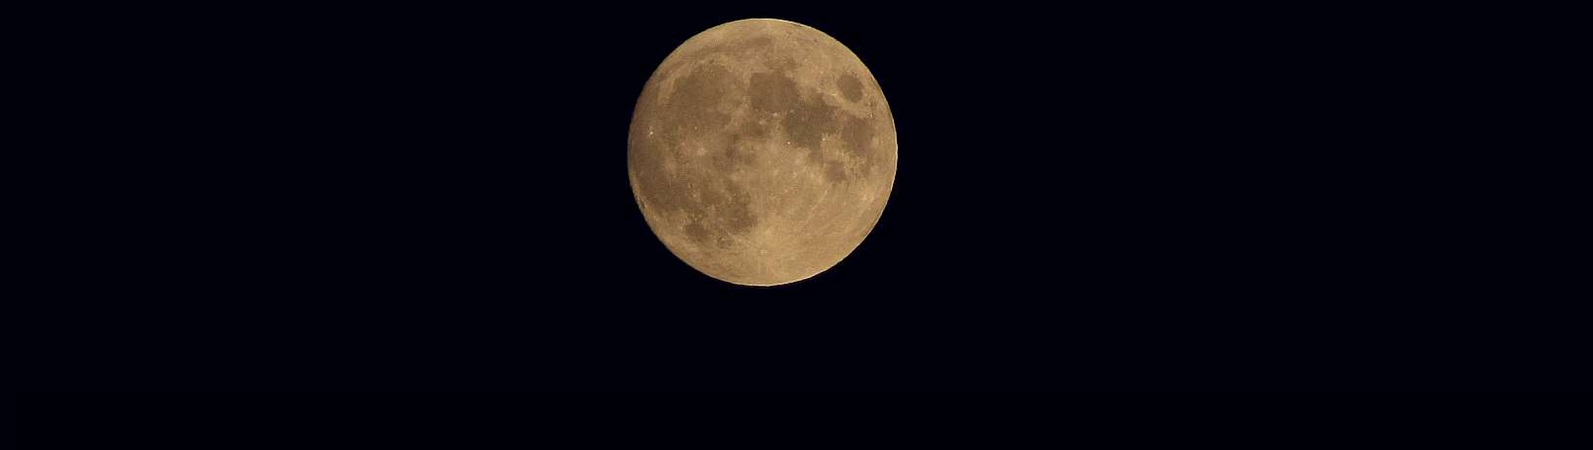 Der Mond am Nachthimmel - Foto © Wolfgang Pehlemann